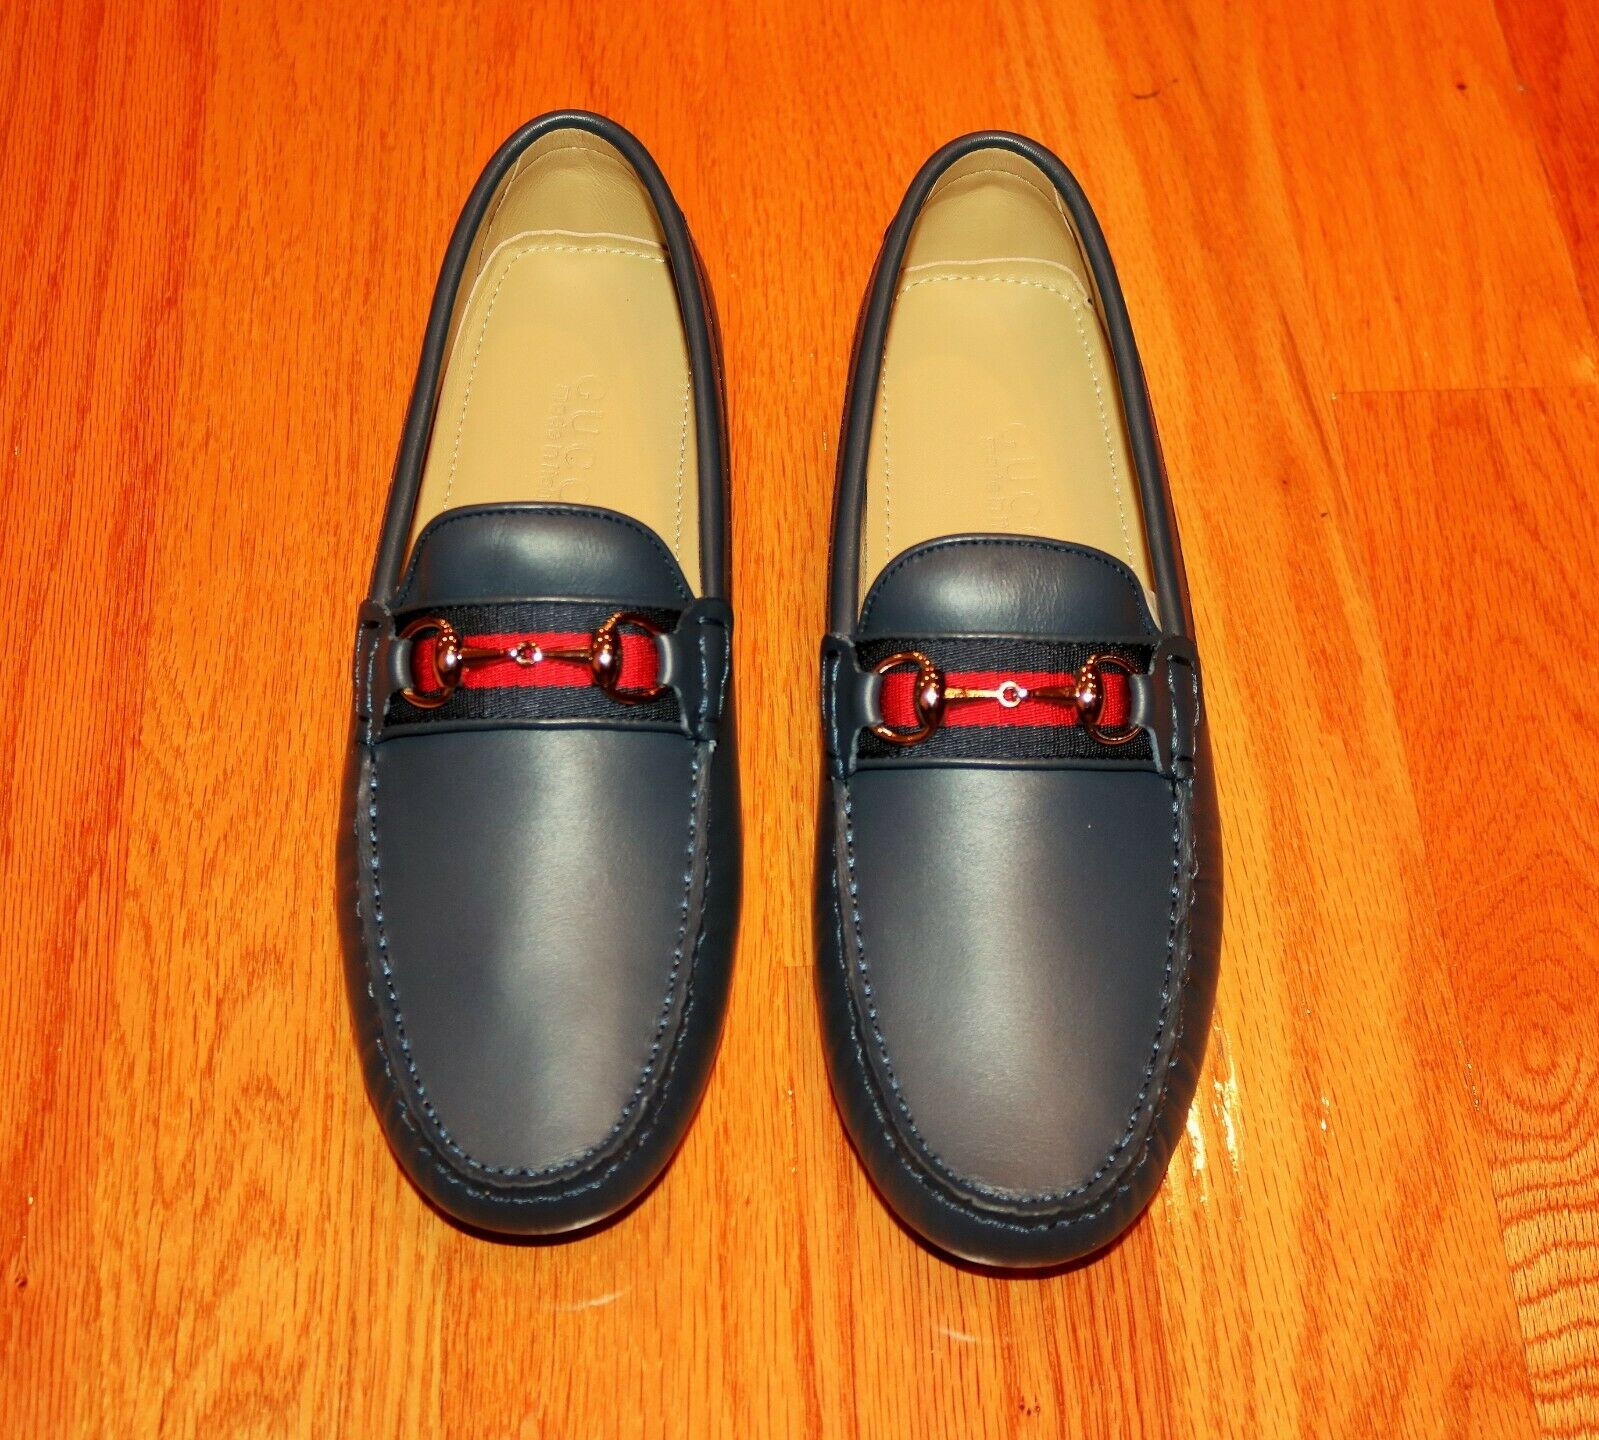 Gucci Horsebit Moccasins Shoes Men Leather Loafer Navy/Blue US 10 EU 45